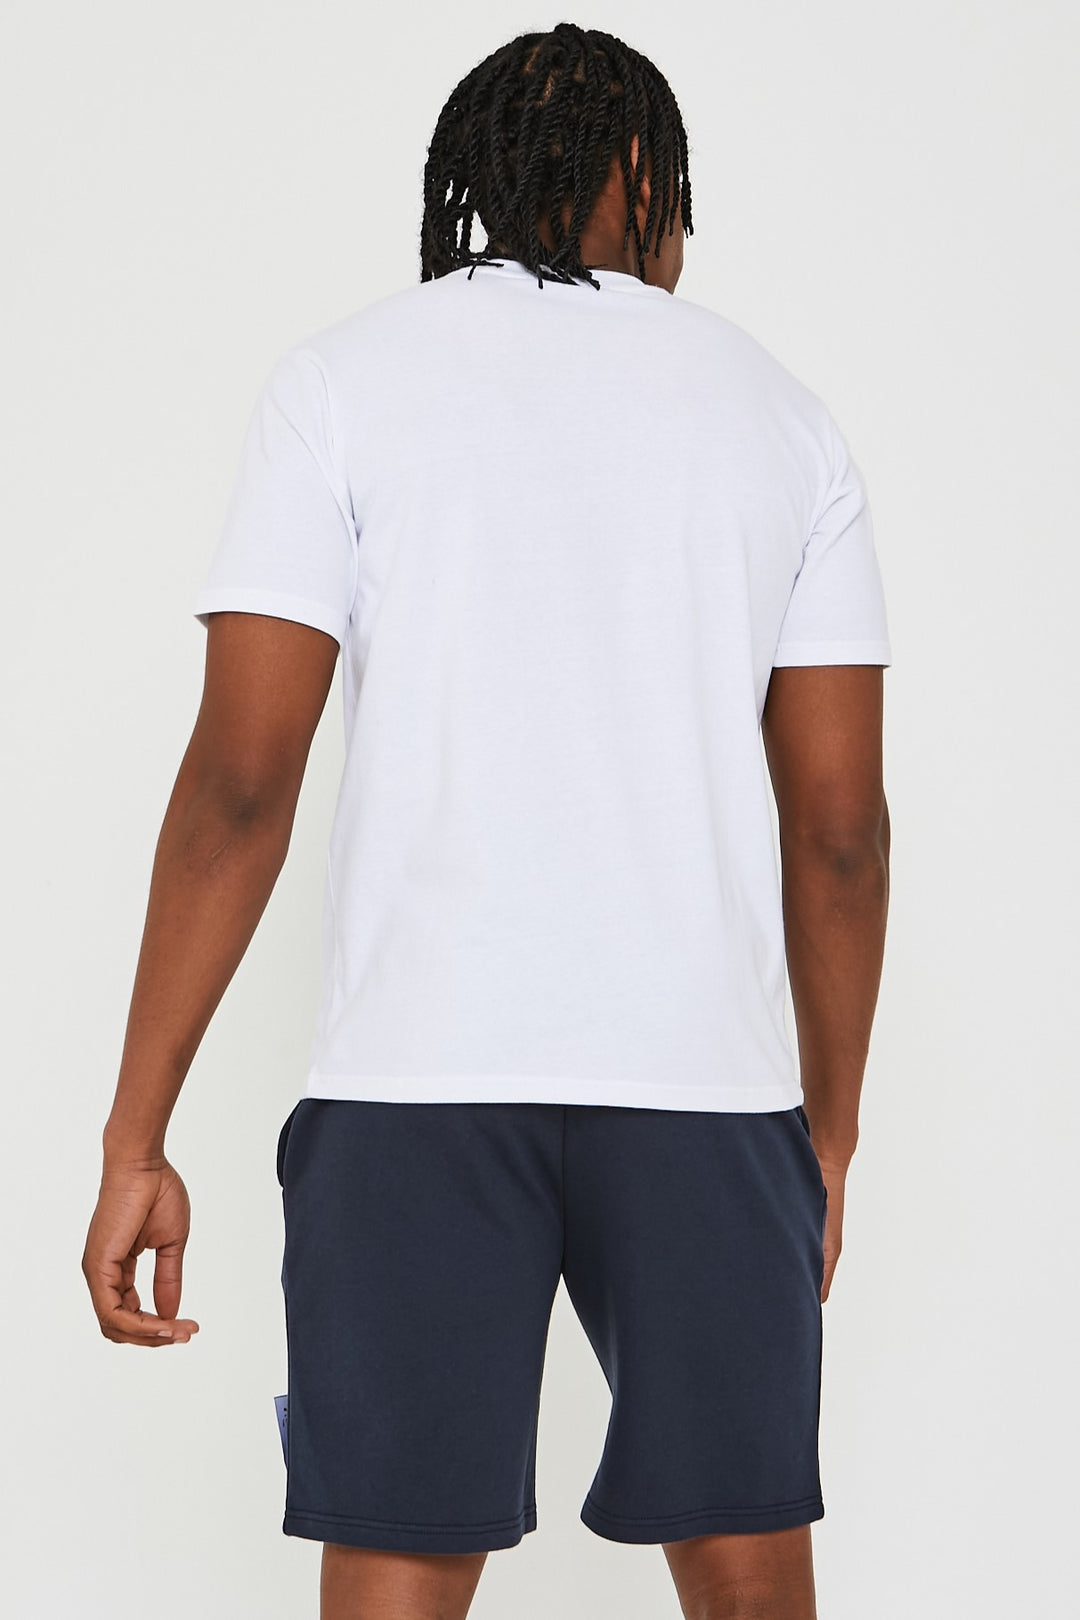 Ivy Road T-Shirt & Short Set - White / Navy